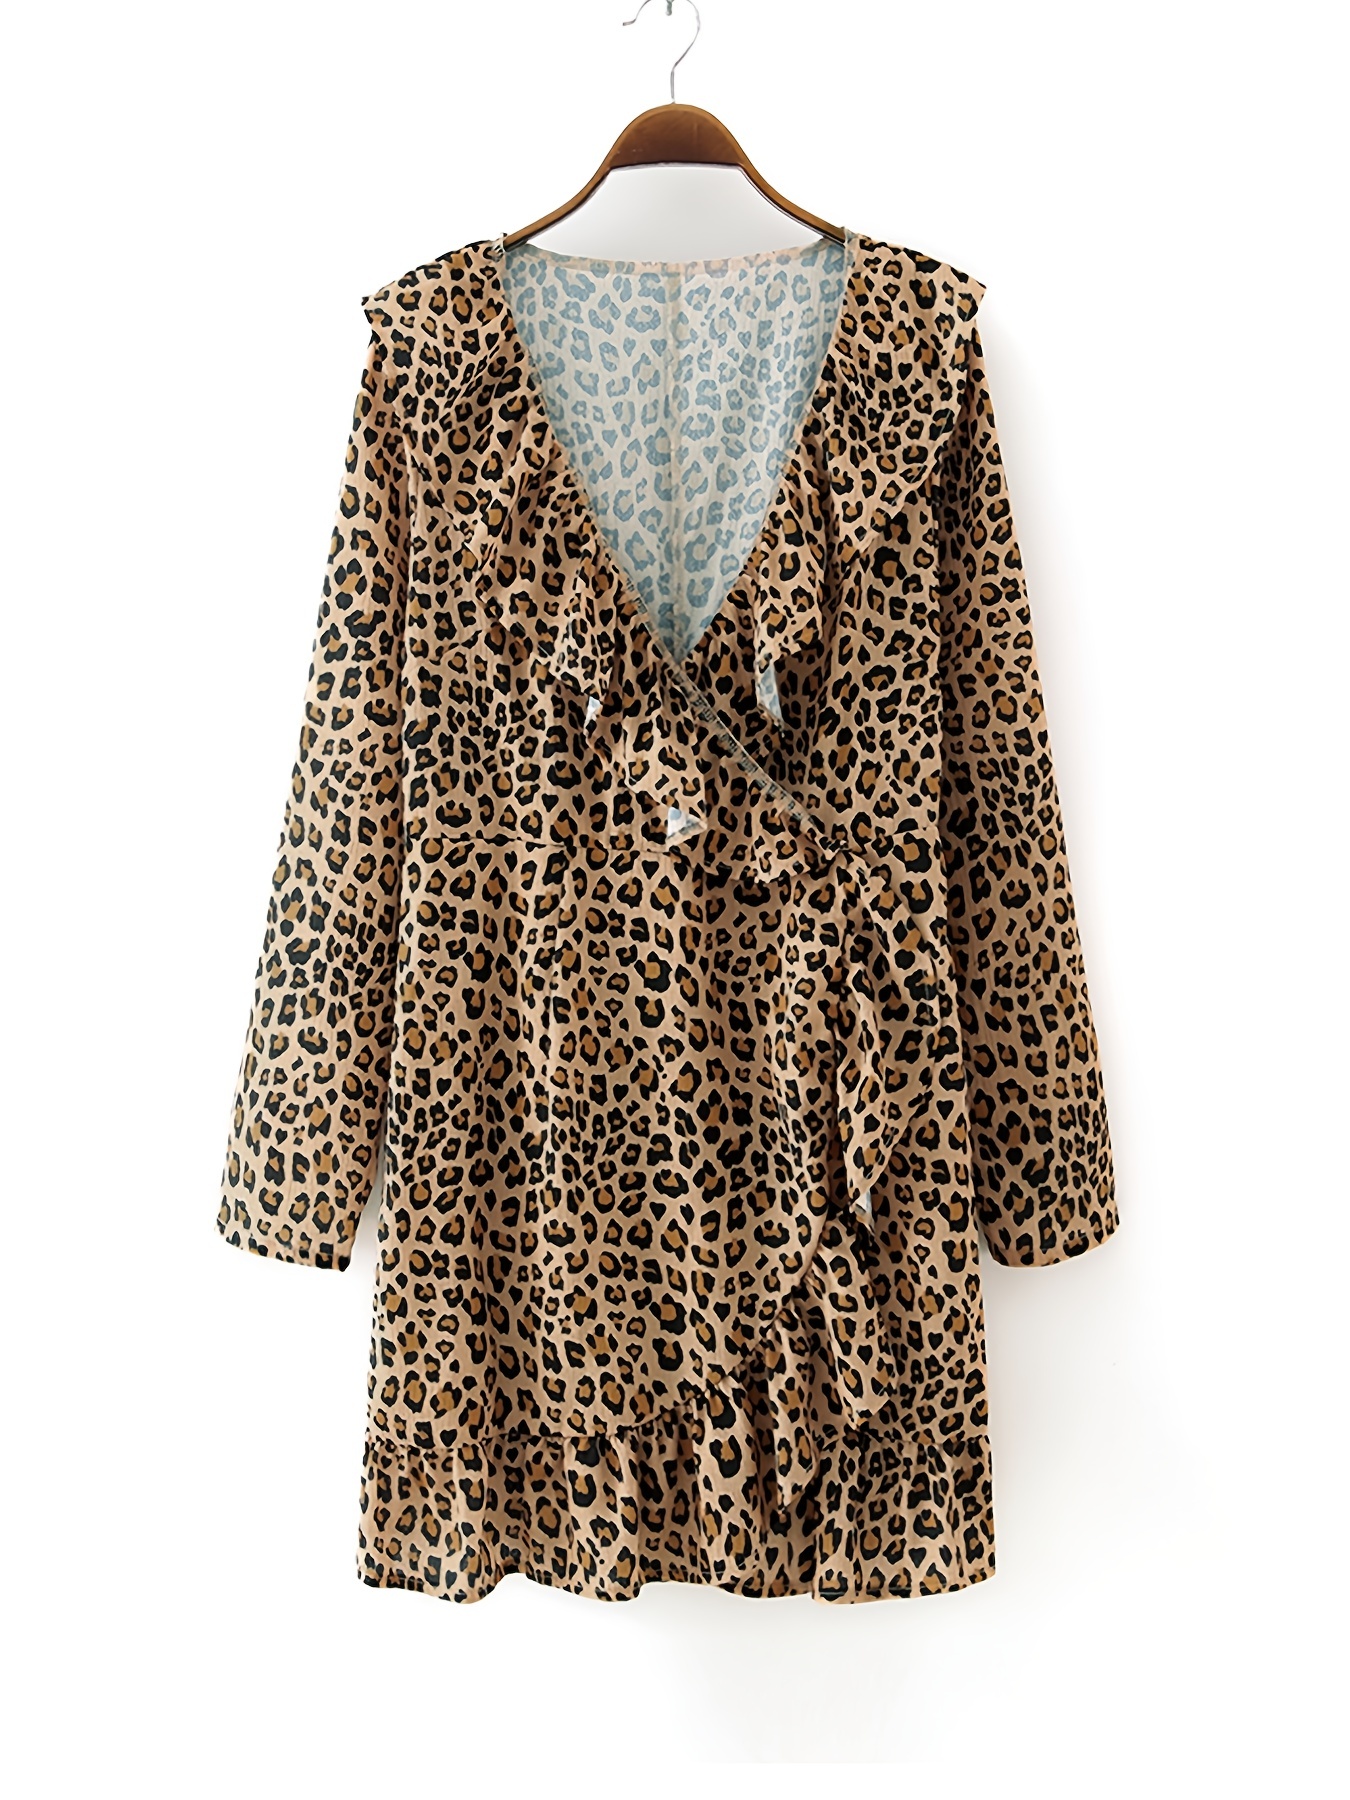 Leopard Print Dresses